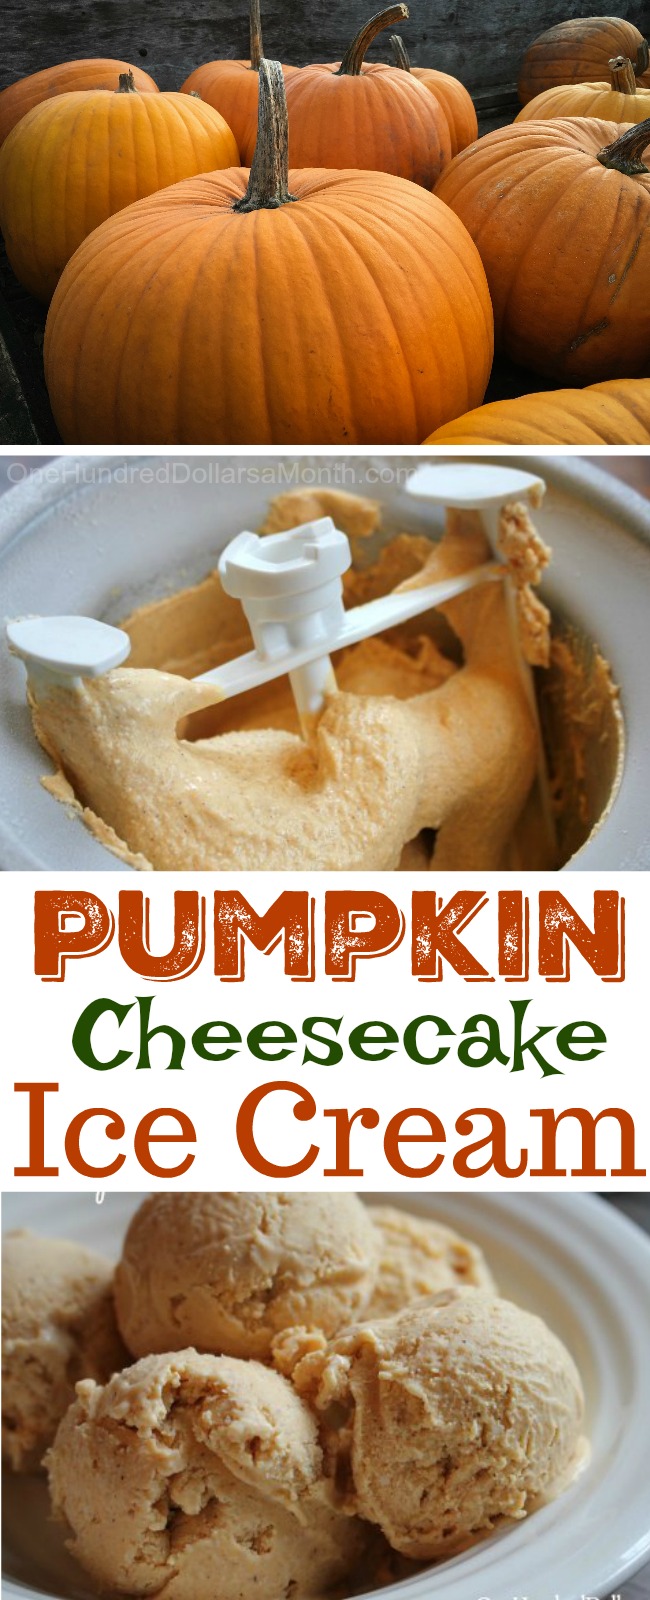 Pumpkin Cheesecake Ice Cream